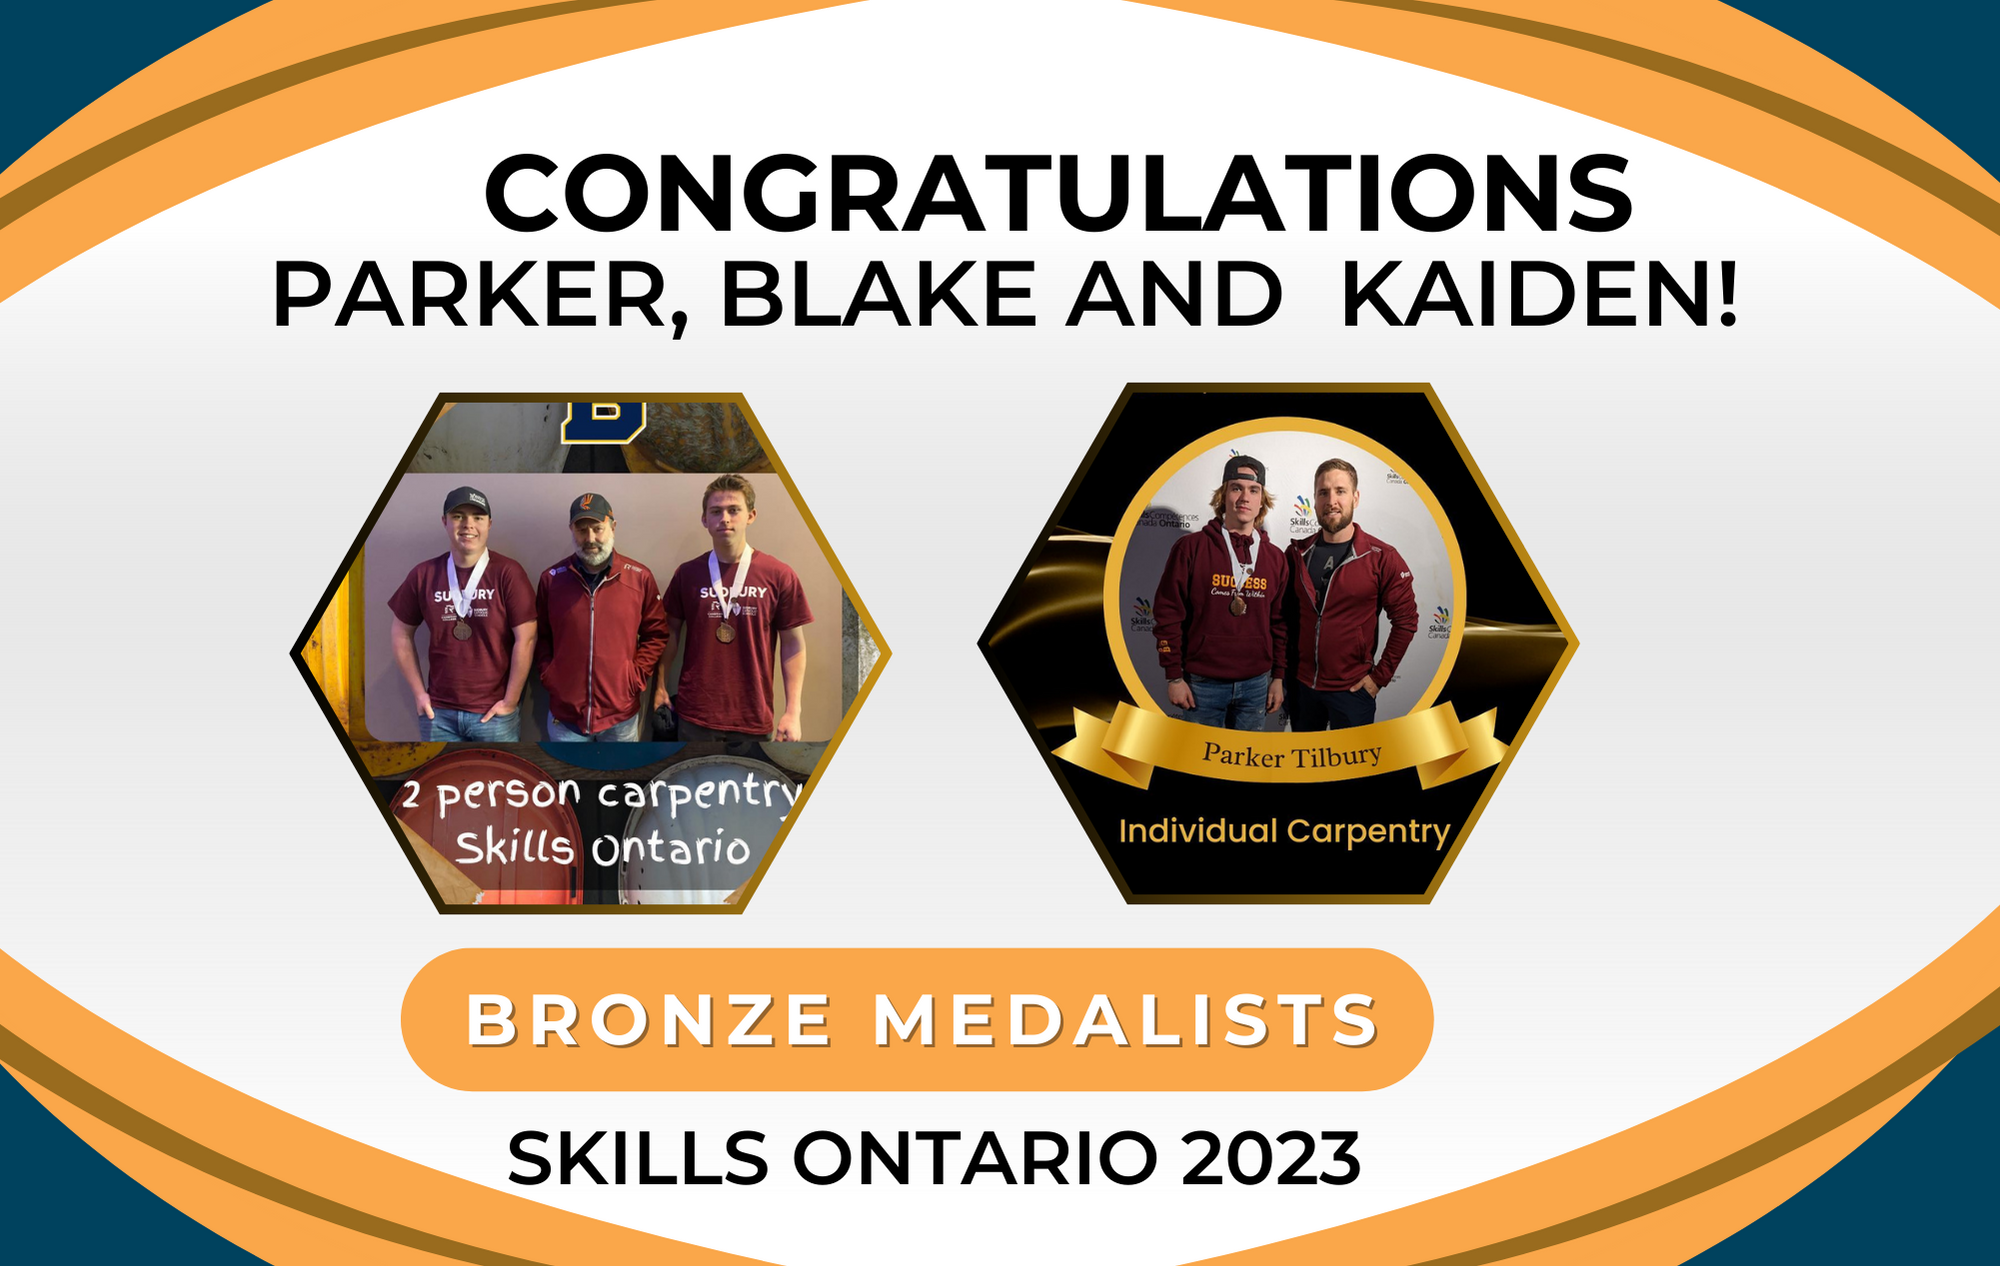 Three Sudbury Catholic Students Receive Bronze Medals at Skills Ontario 2023 Competitions!